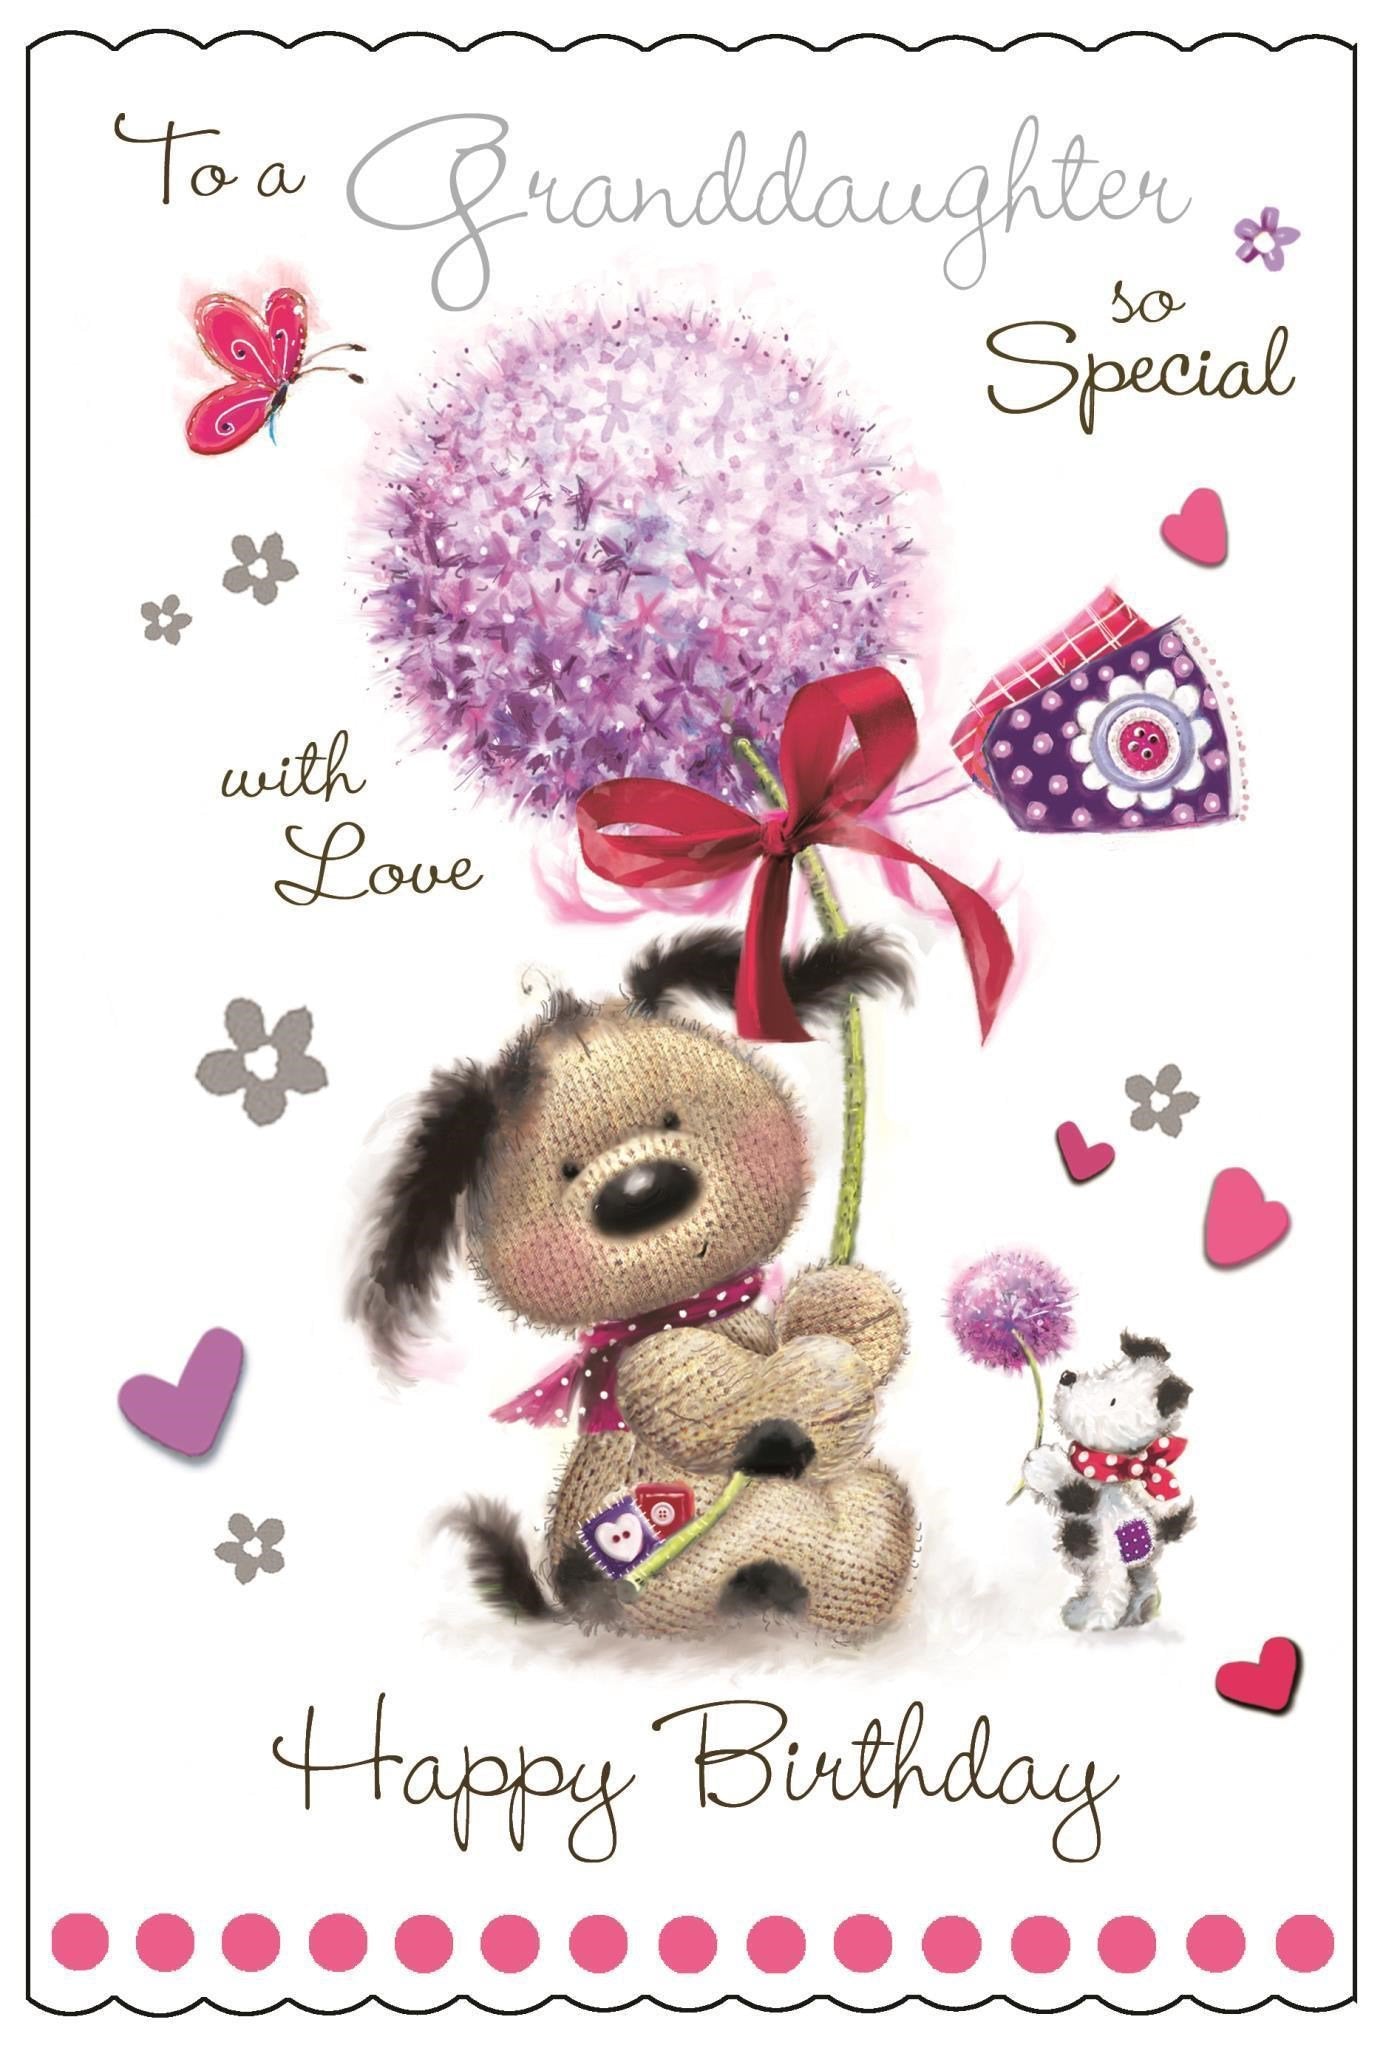 Front of Granddaughter Birthday Dandelion Greetings Card